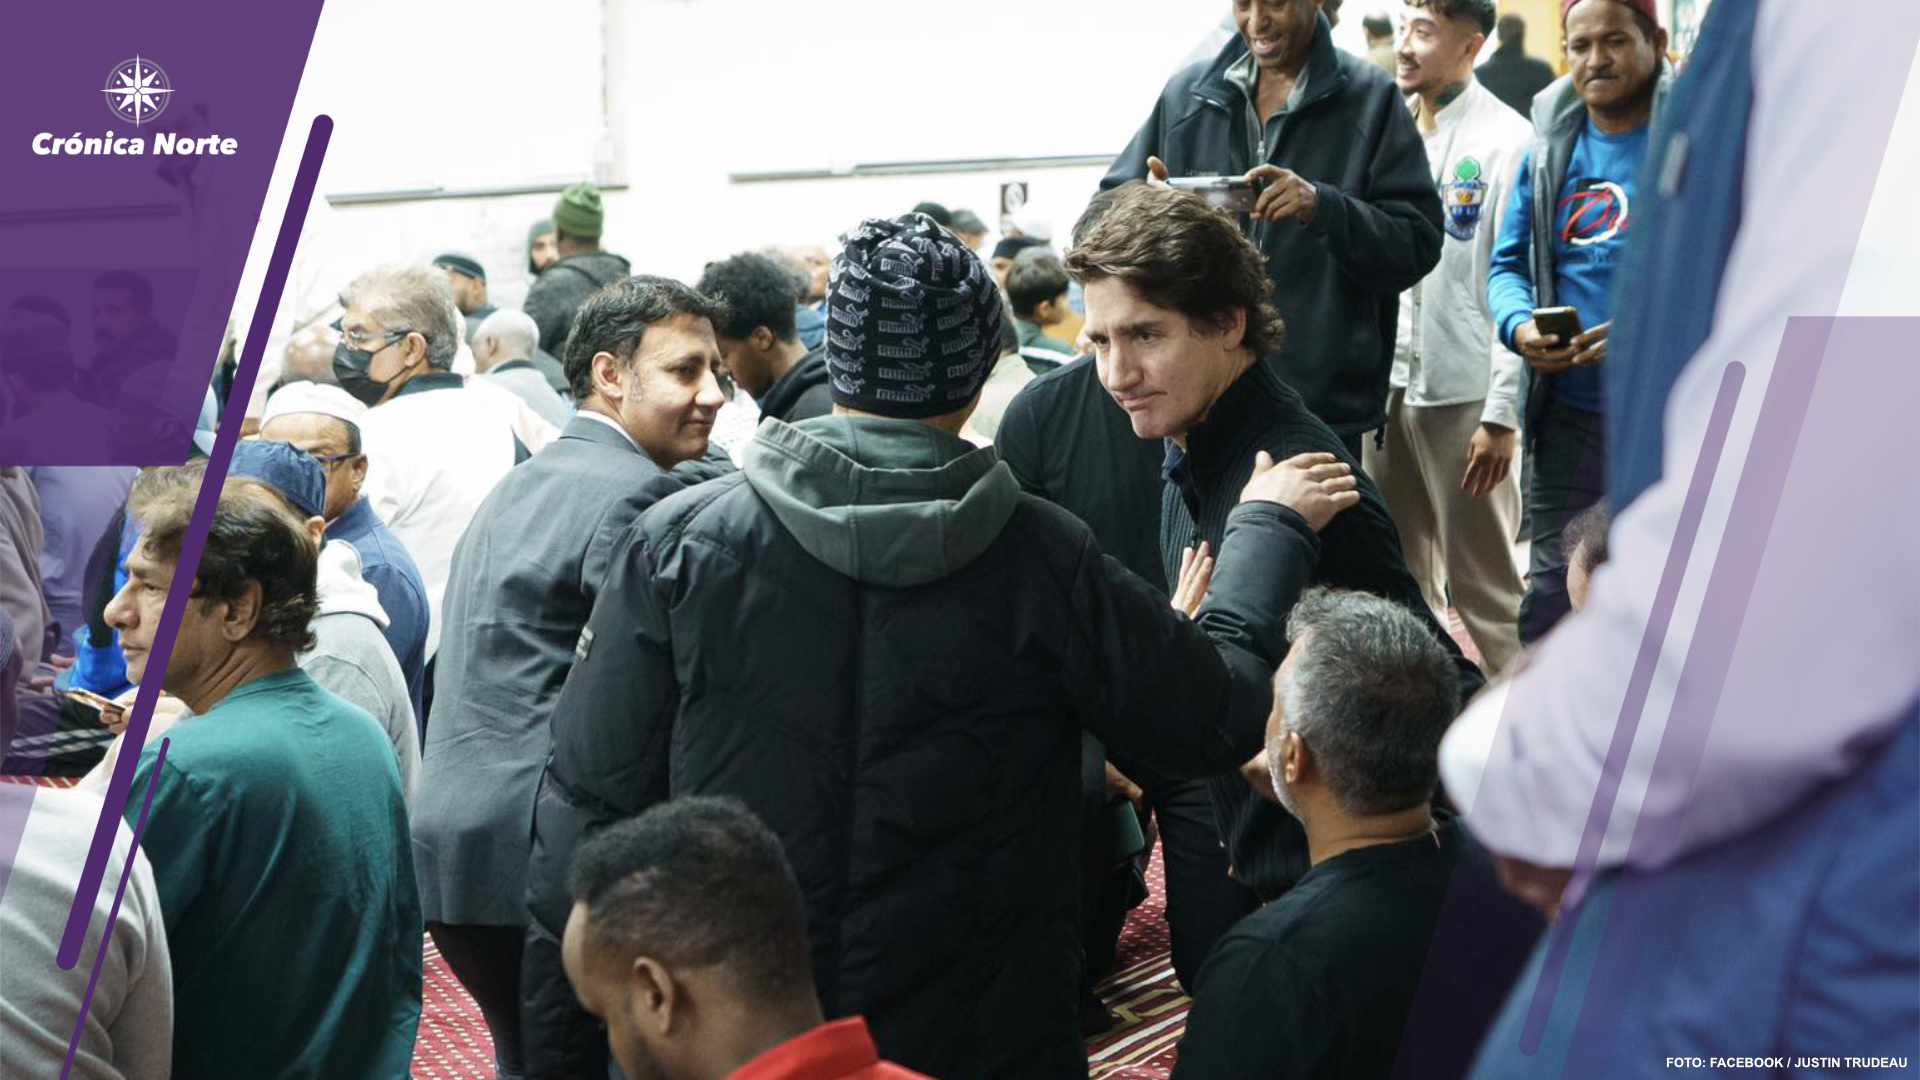 Confrontan a Trudeau durante su visita a una mezquita